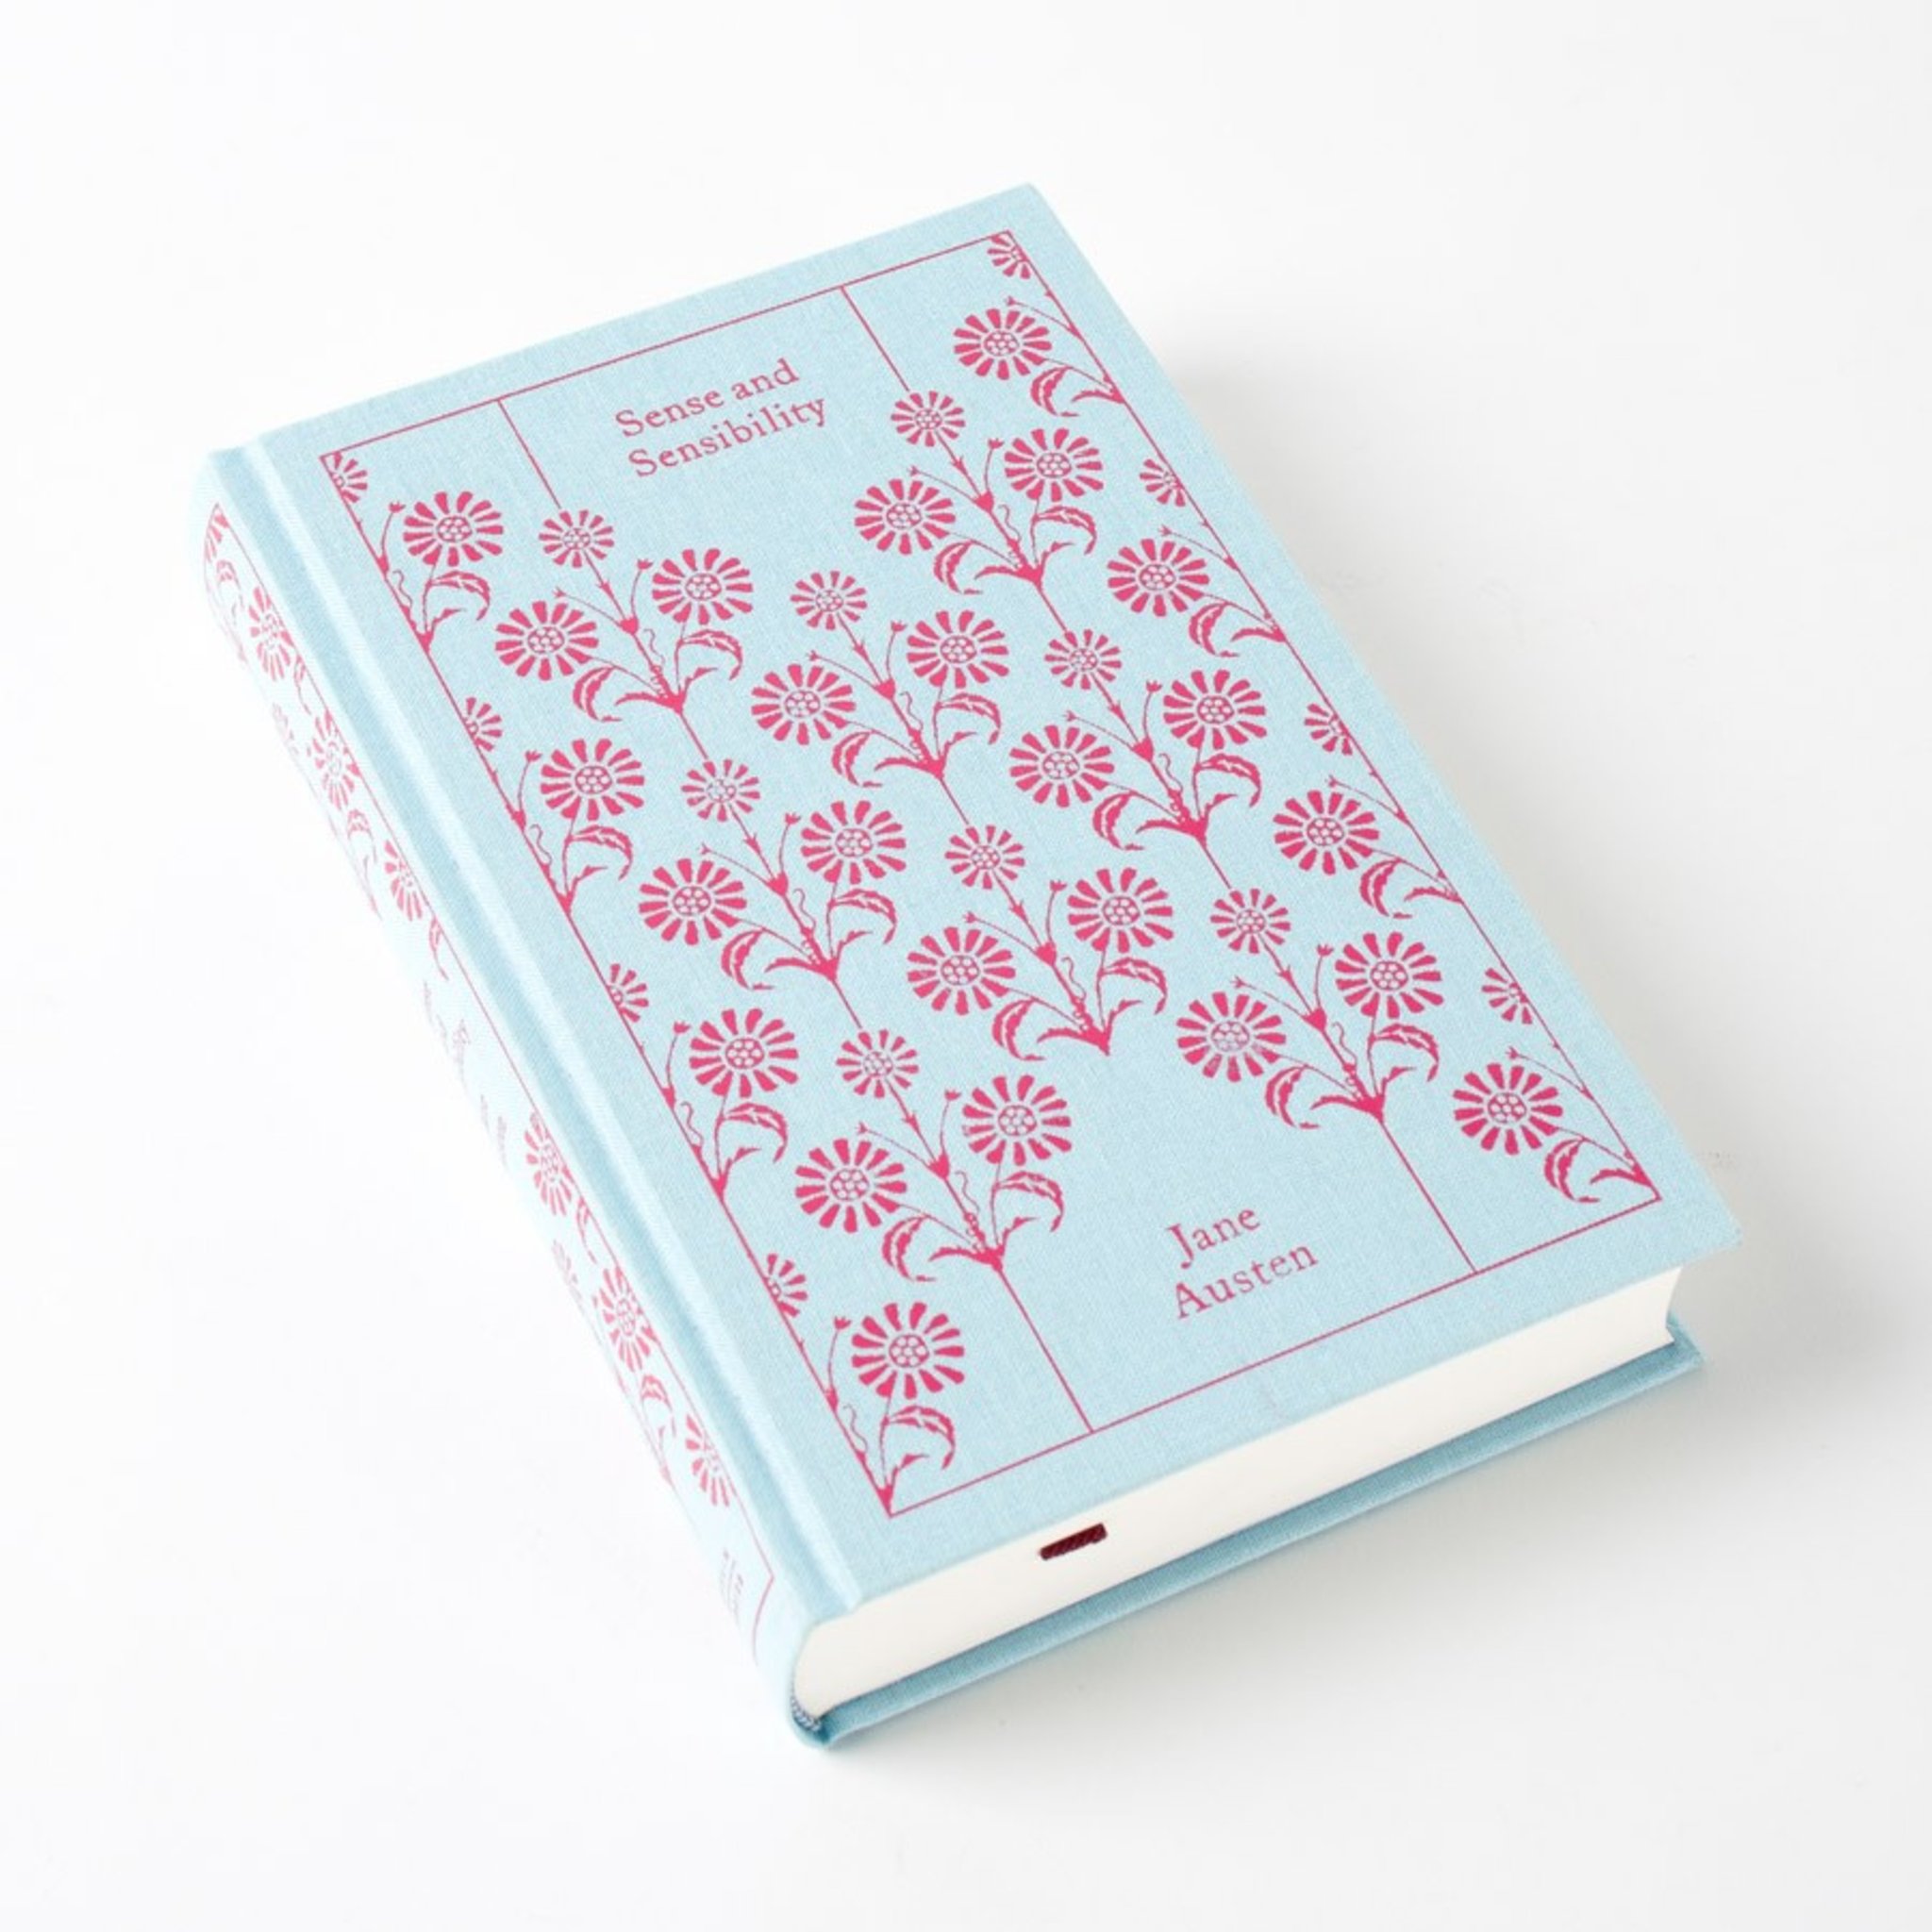 Jane-Austen-Sense-and-Sensibility-book-makemesomethingspecial.com